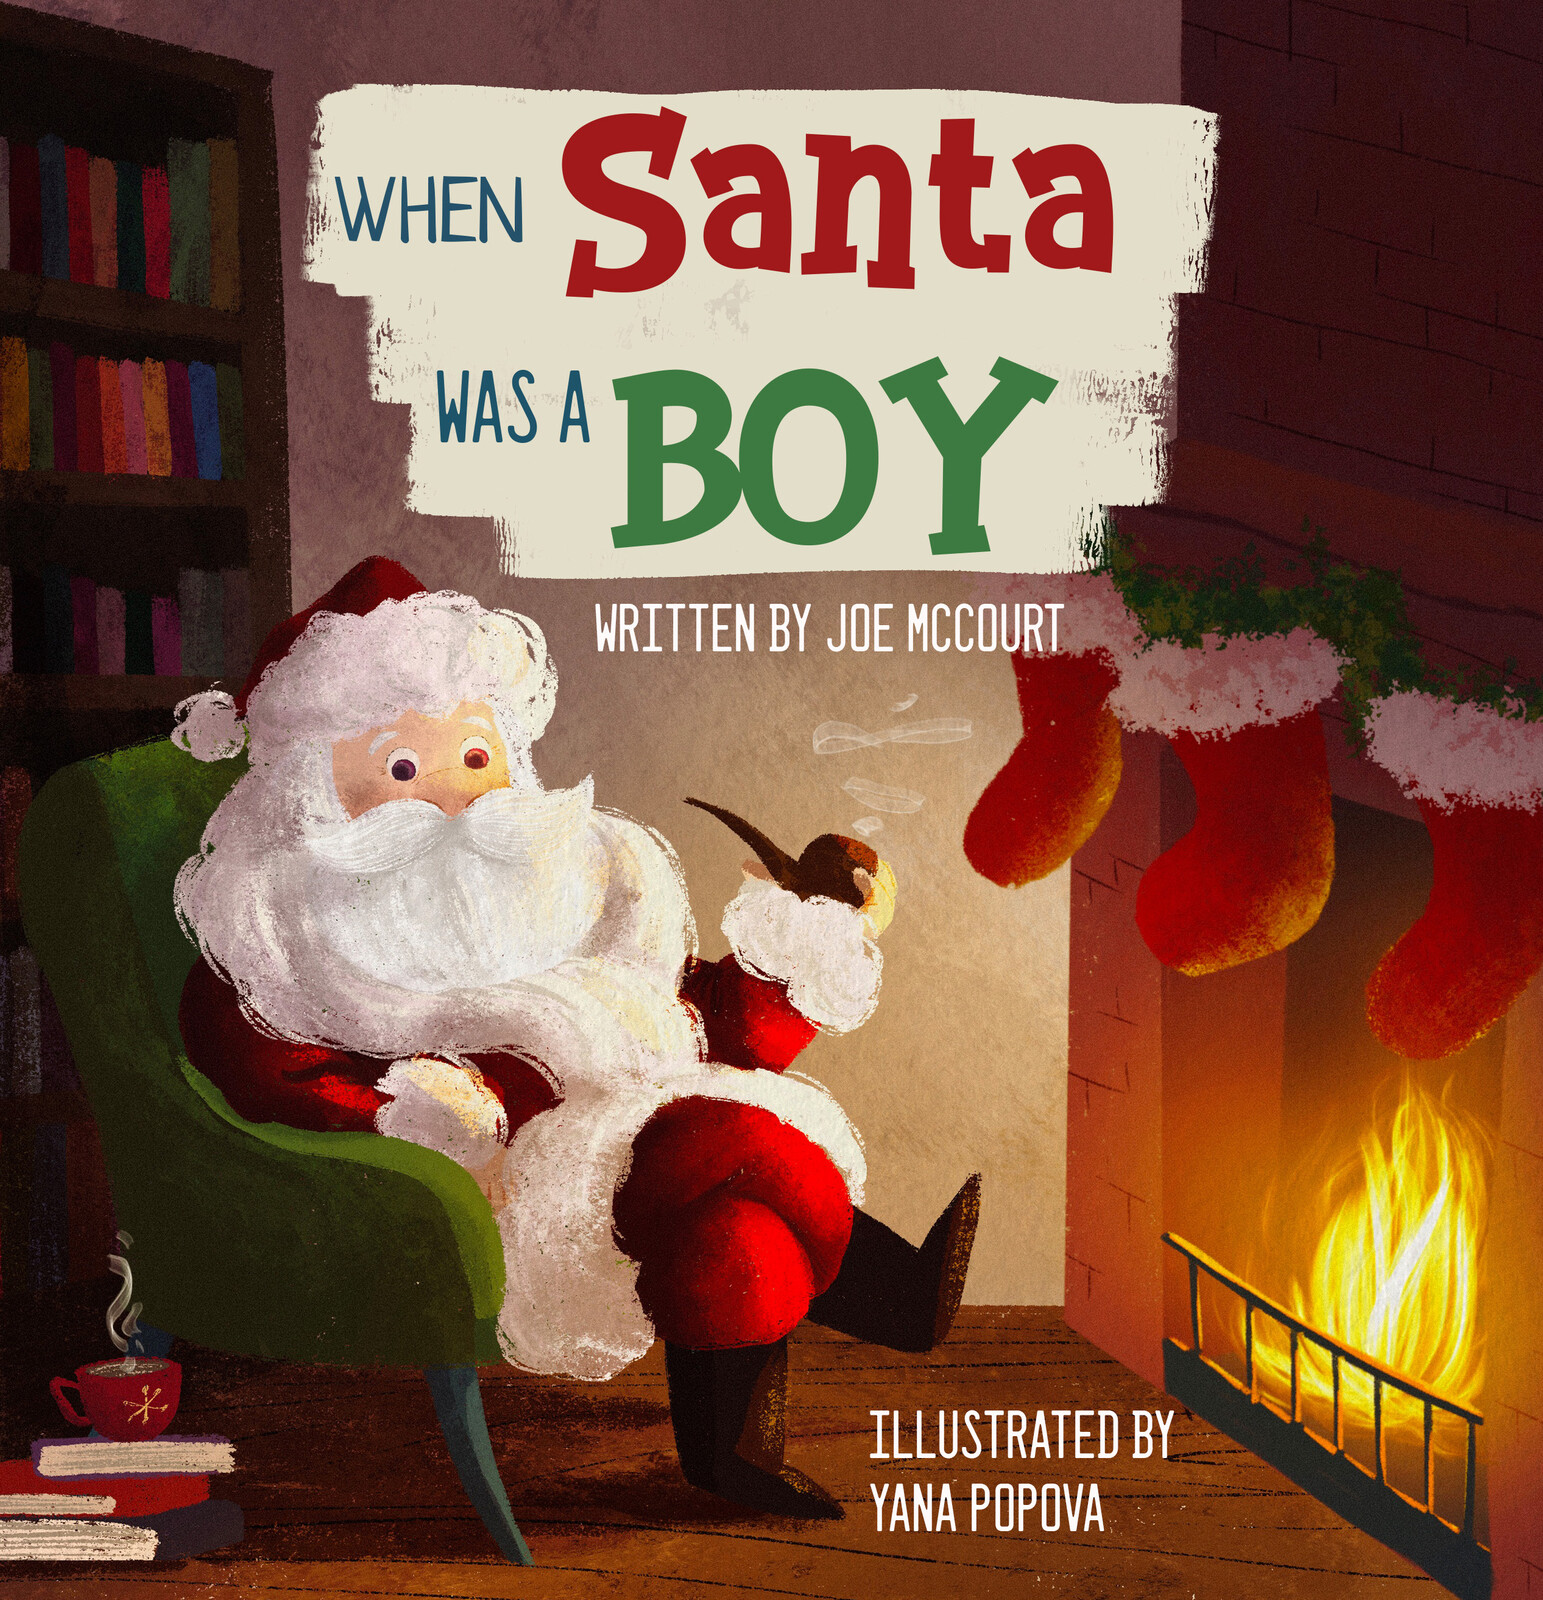 Coming in 2023: When Santa was a boy 